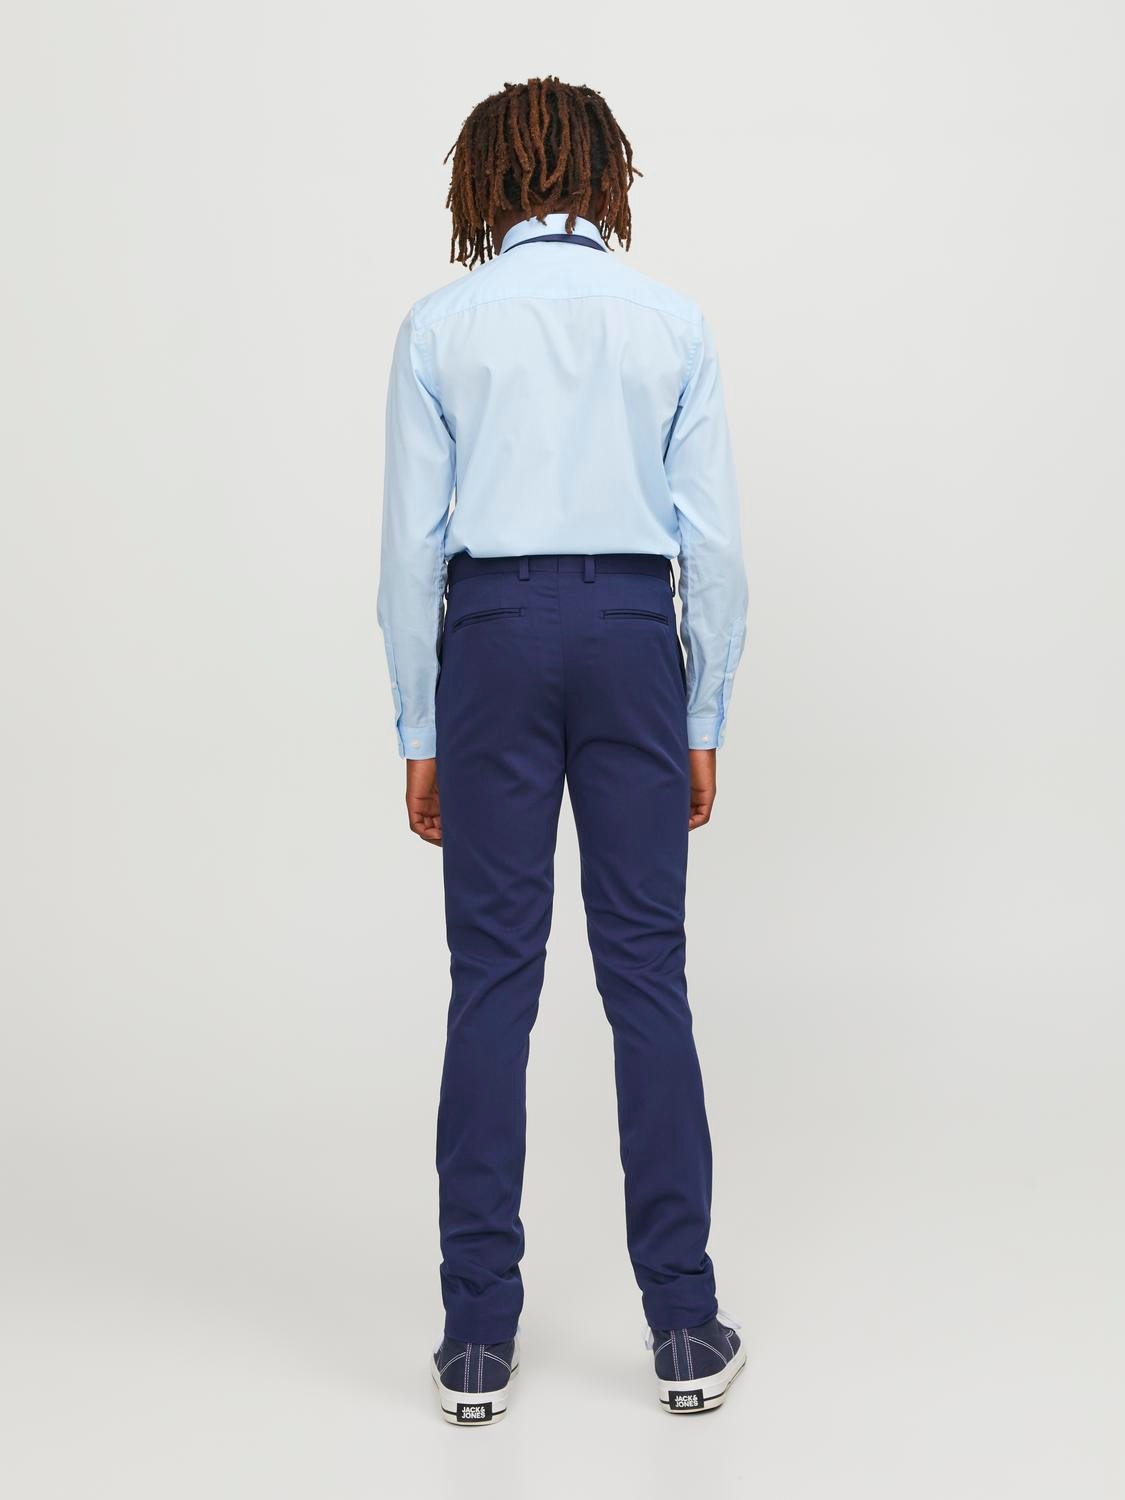 Jack & Jones Camicia formale Mini -Cashmere Blue - 12257417